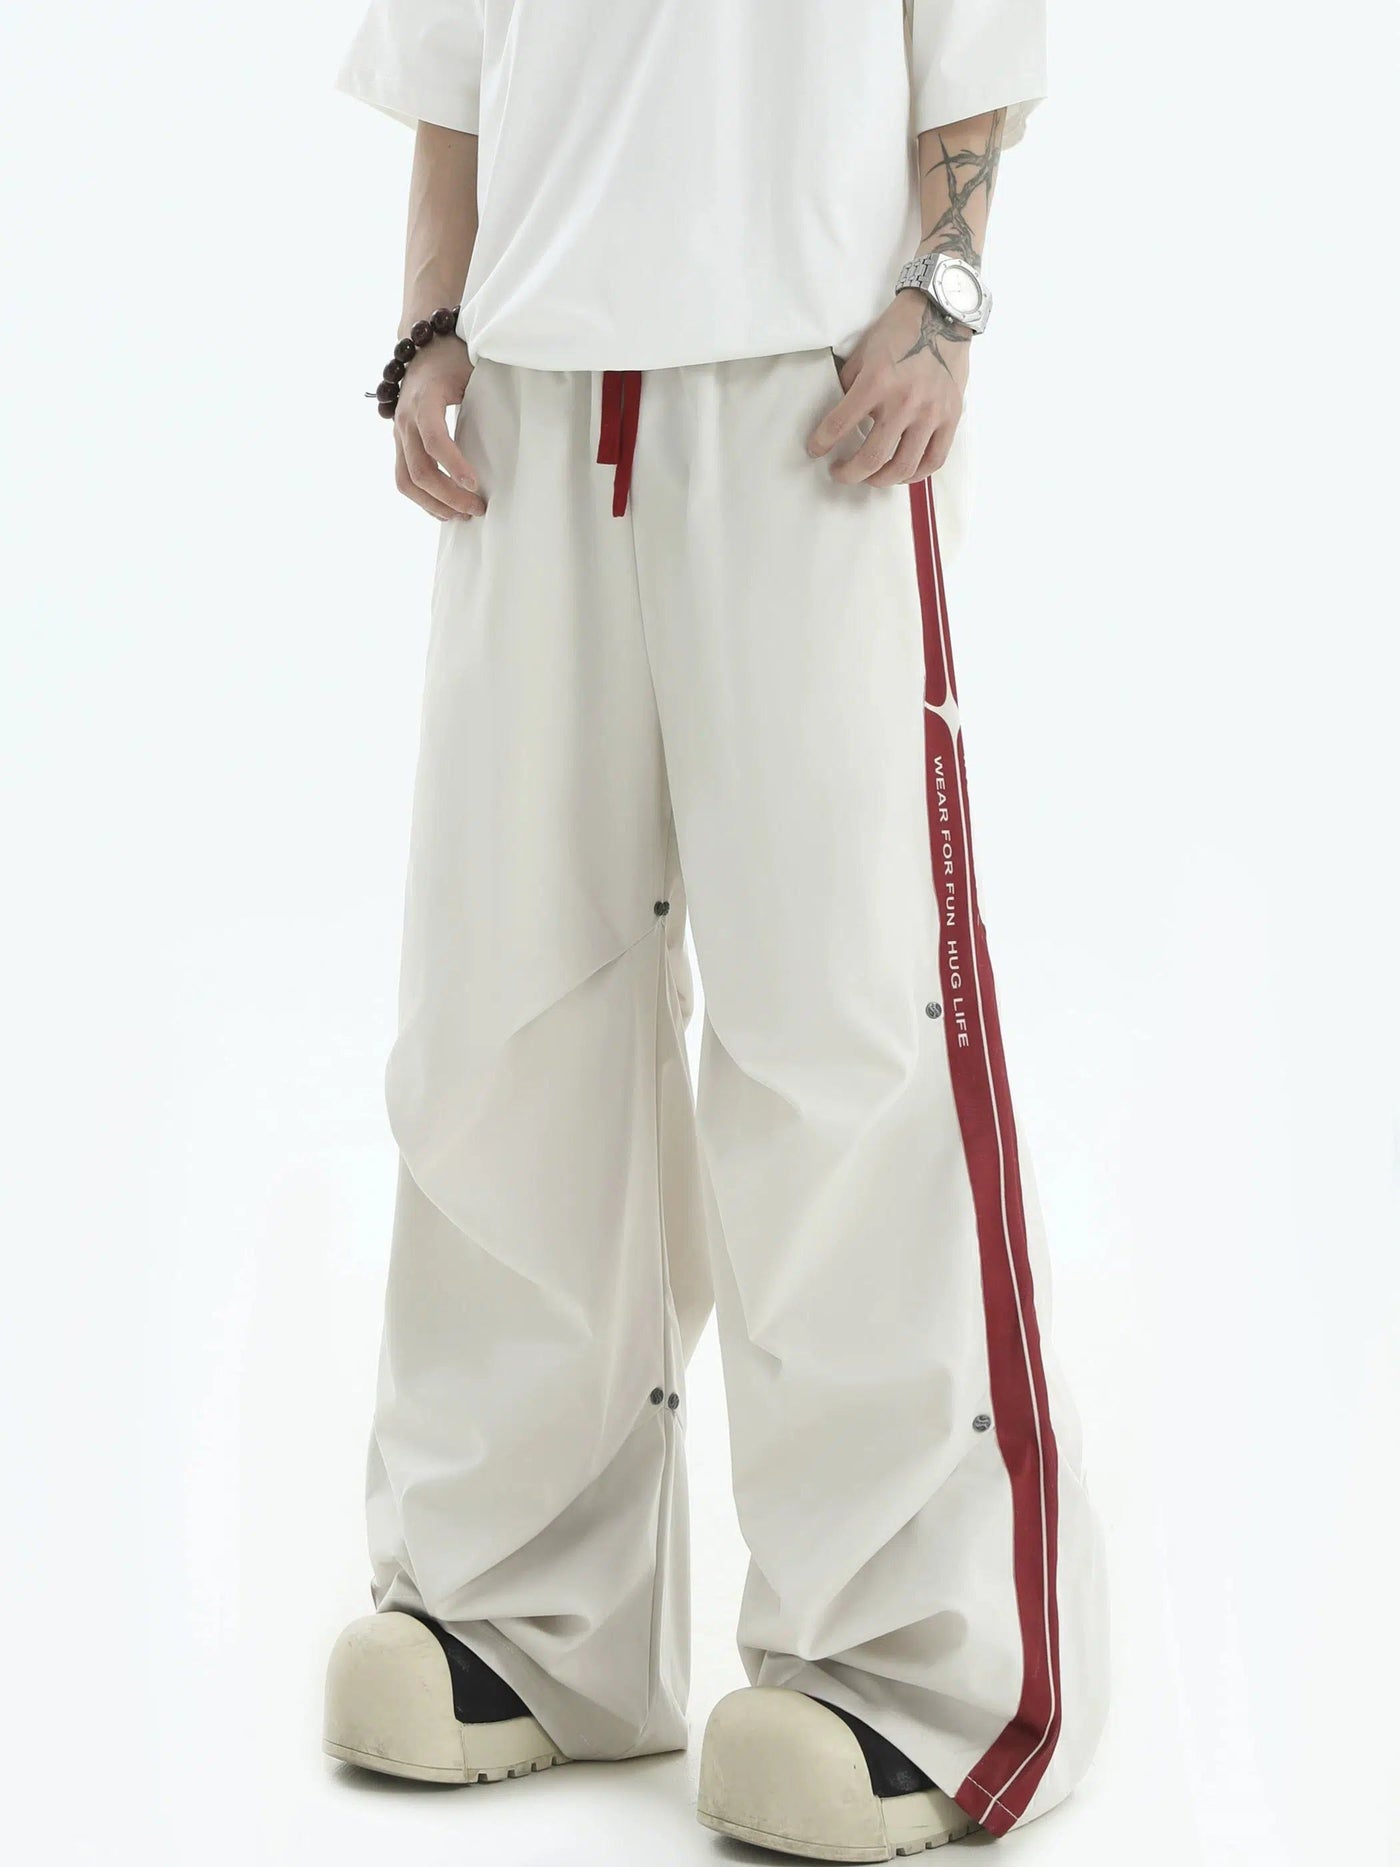 Wide Fit Contrast Pants Korean Street Fashion Pants By INS Korea Shop Online at OH Vault